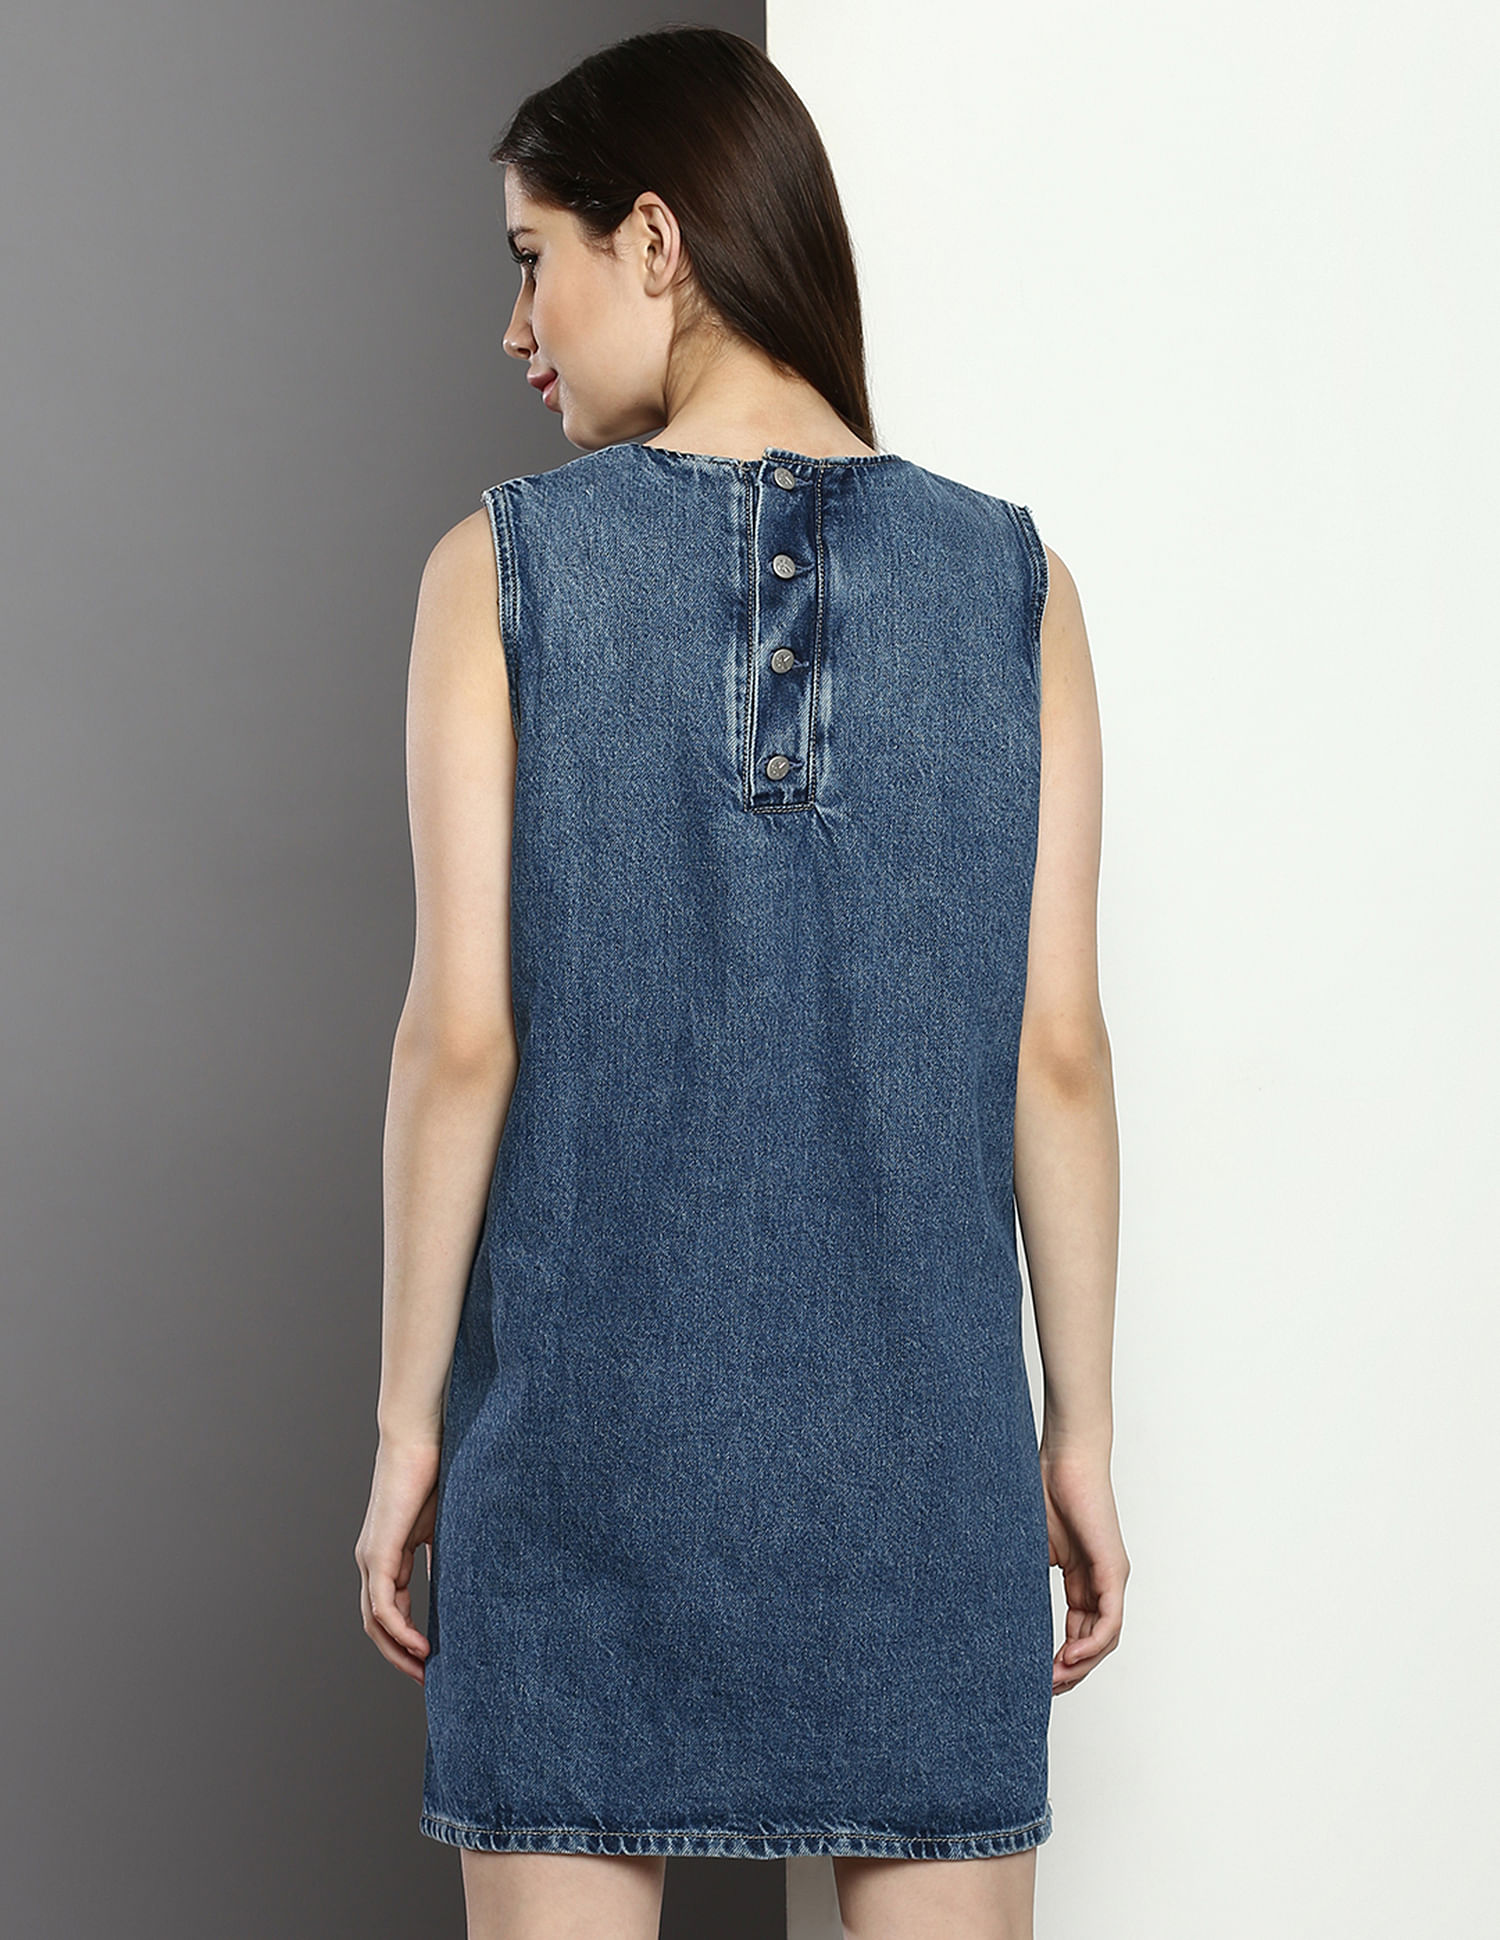 Amalie The Label - Herrera Recycled Cotton Denim Dress in Mid Blue Wash |  Showpo USA